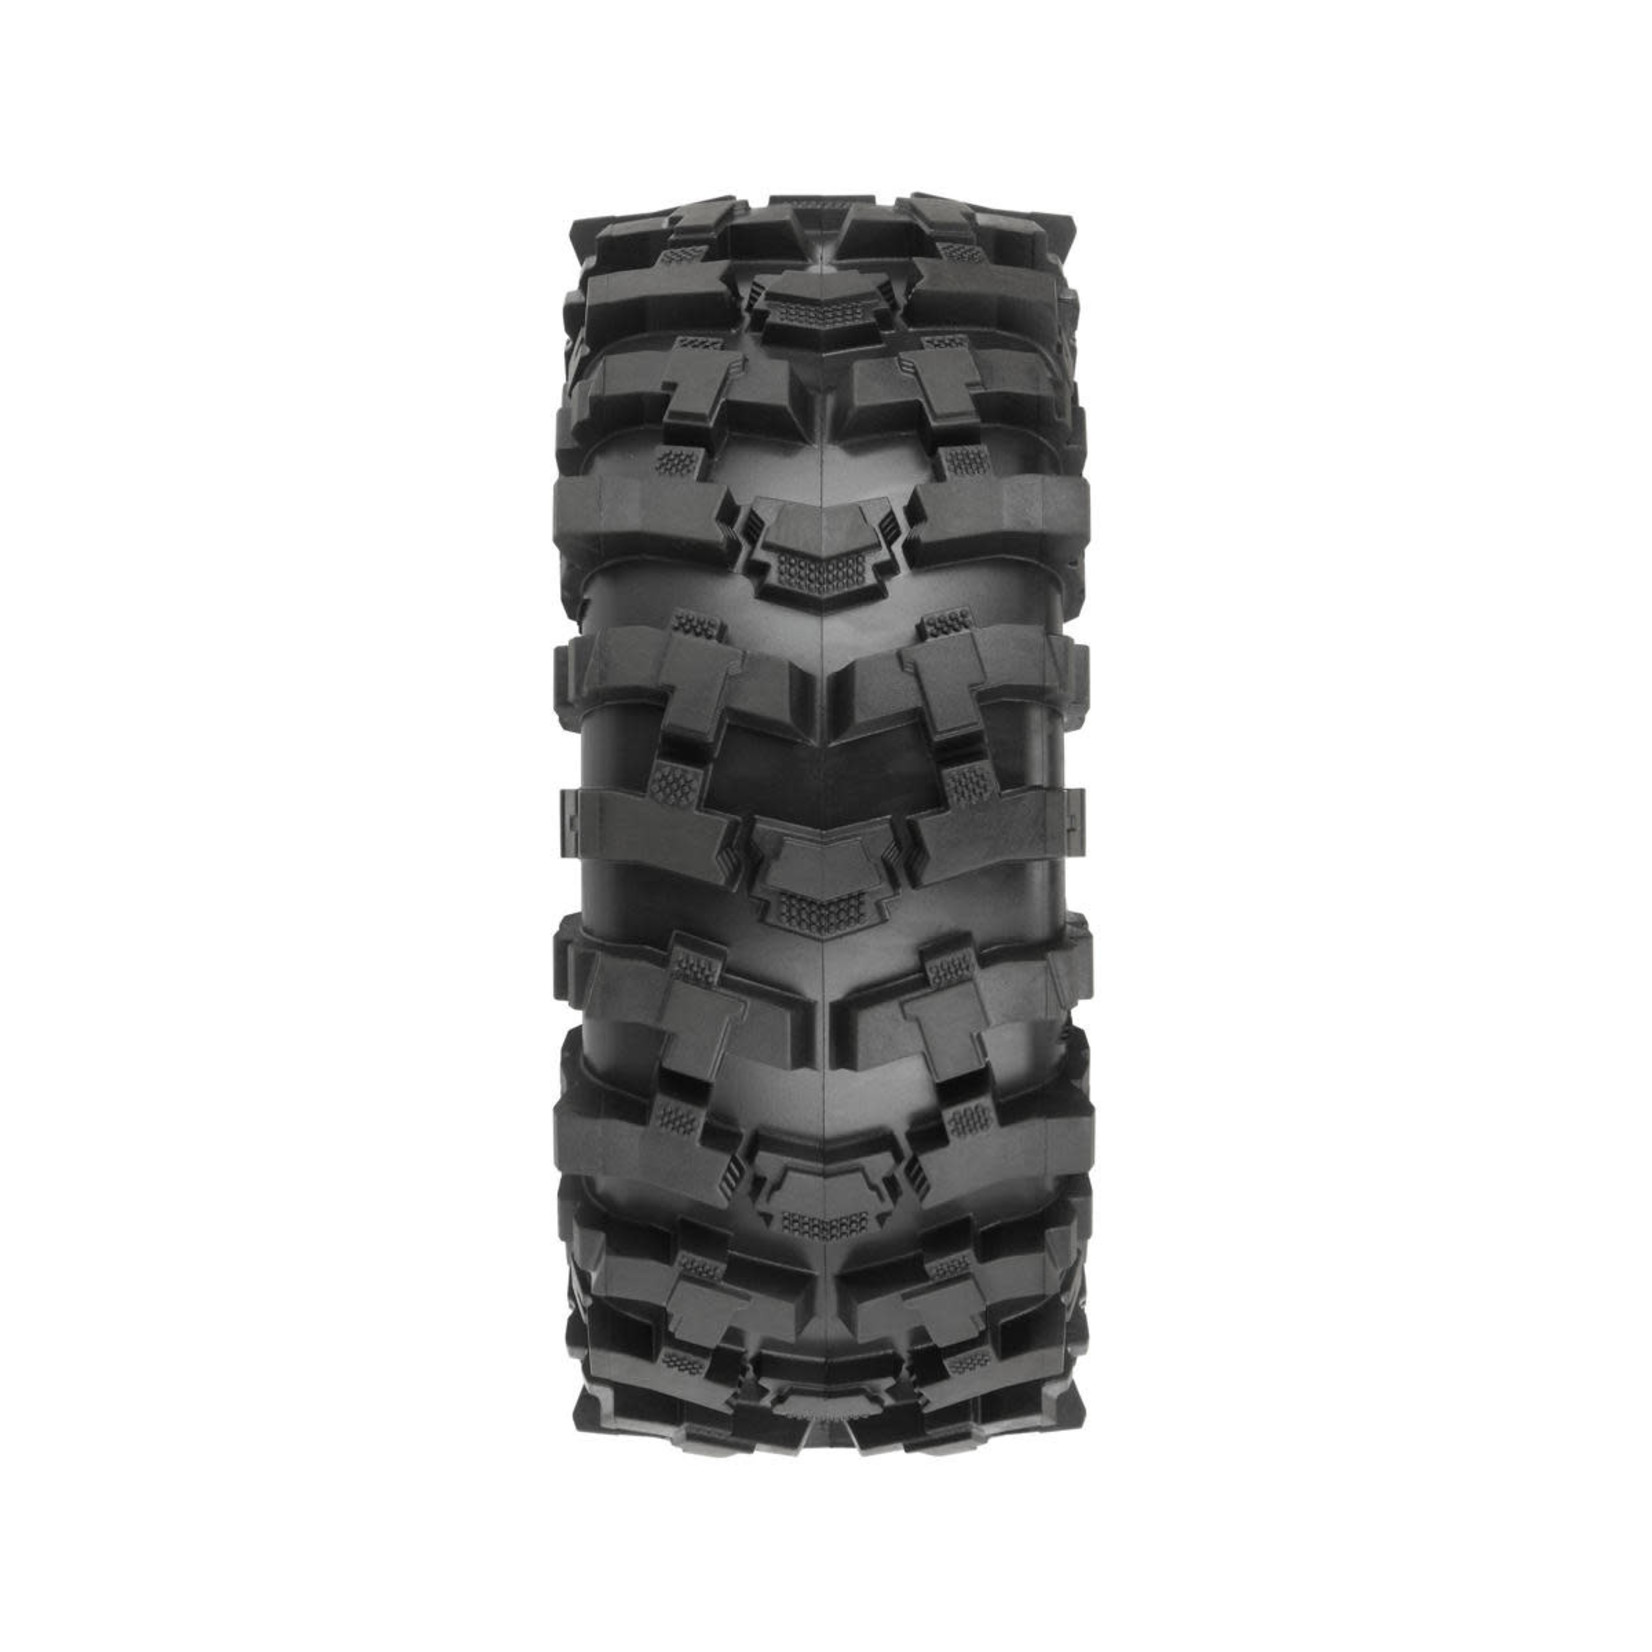 Pro-Line Pro-Line Mickey Thompson Baja Pro X 1.9" Rock Crawler Tires (2) (G8) w/Memory Foam #10213-14